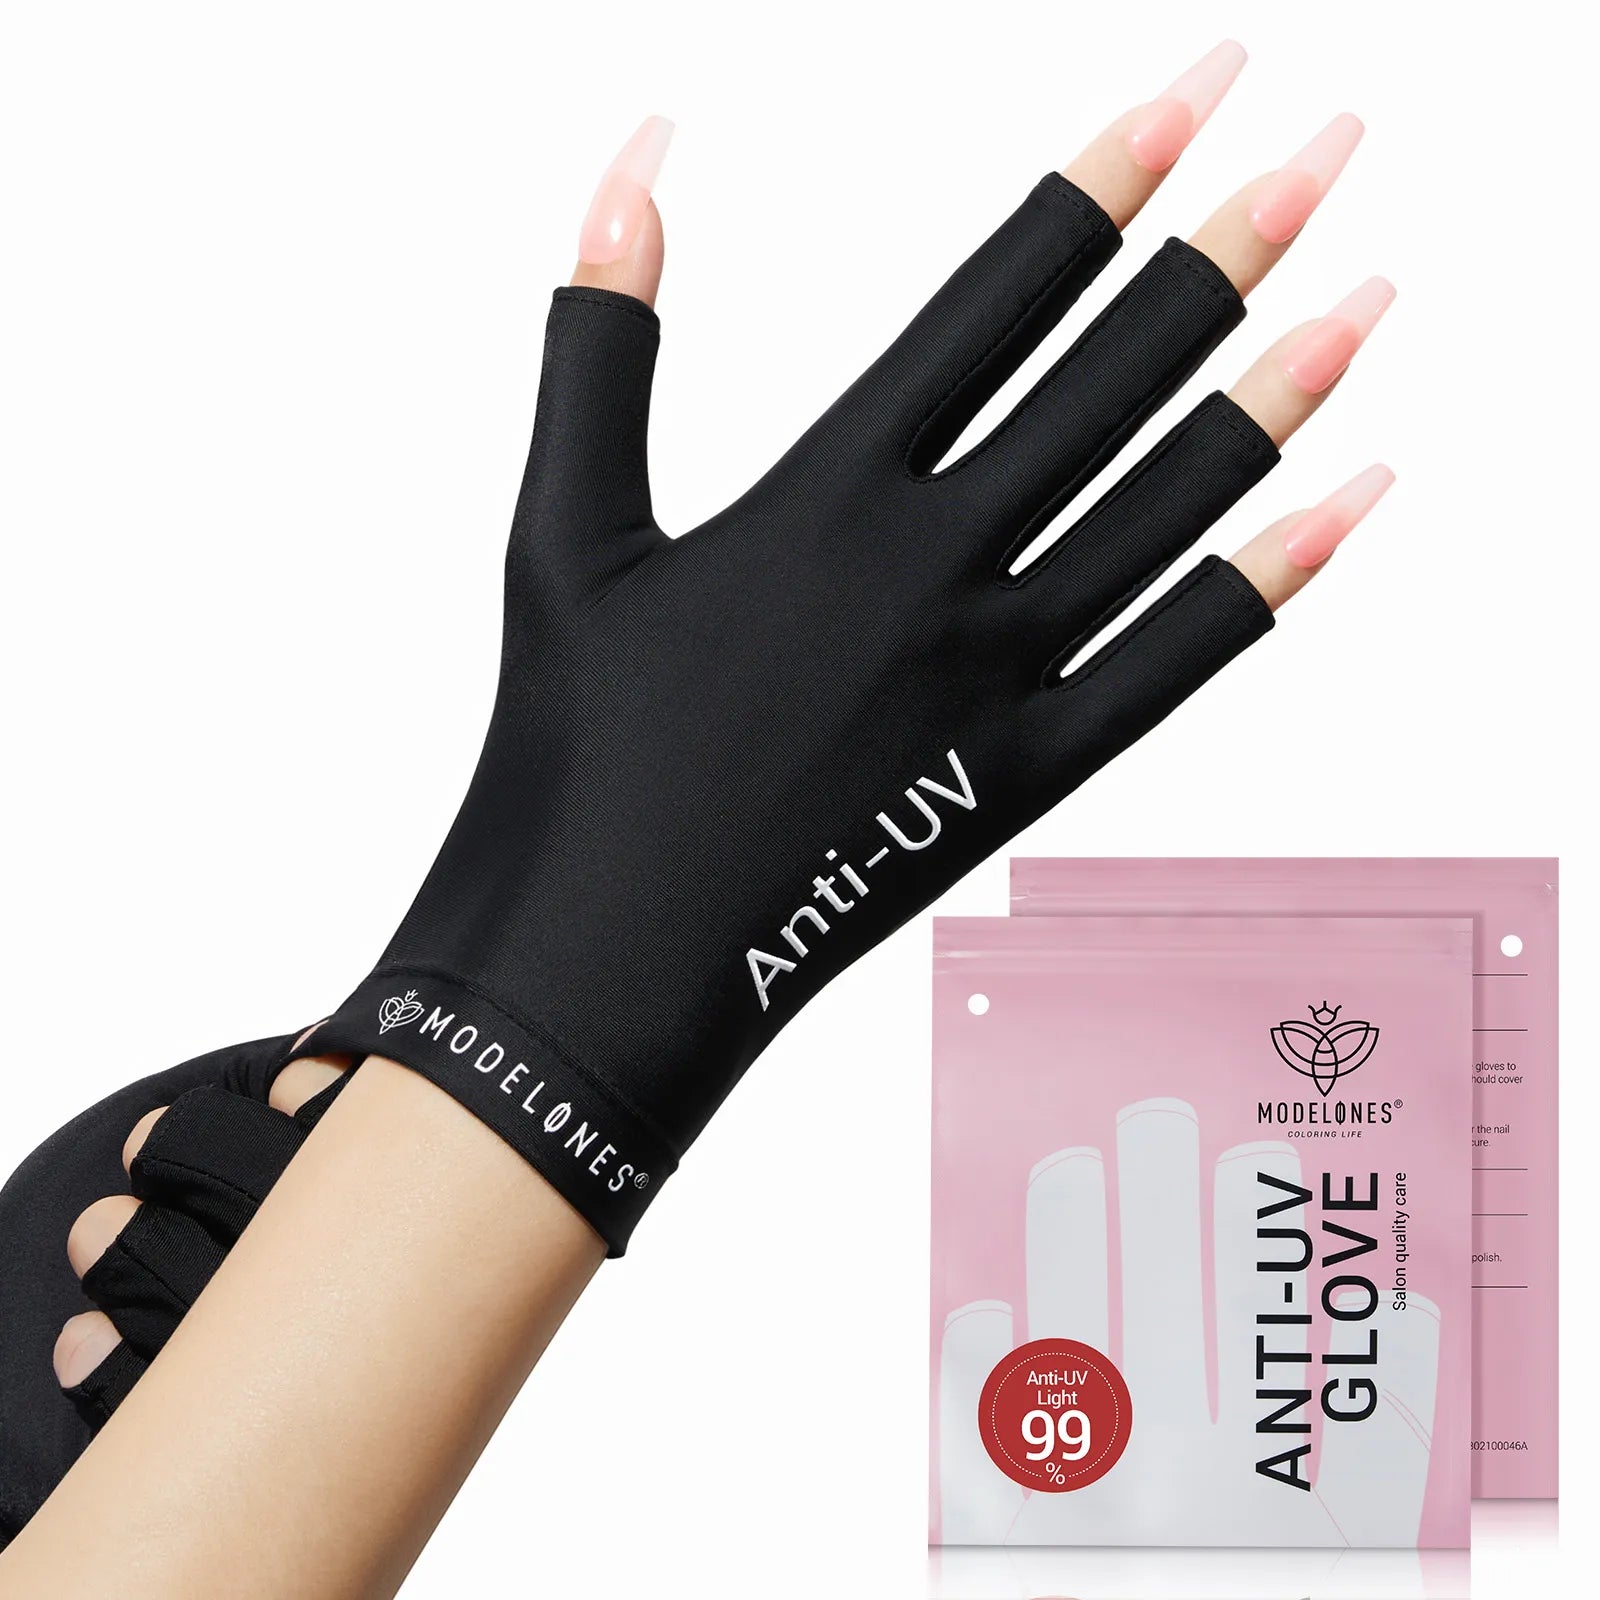 Black Anti-UV light Glove For Nails Salon Professional UPF 99+【US/CA O